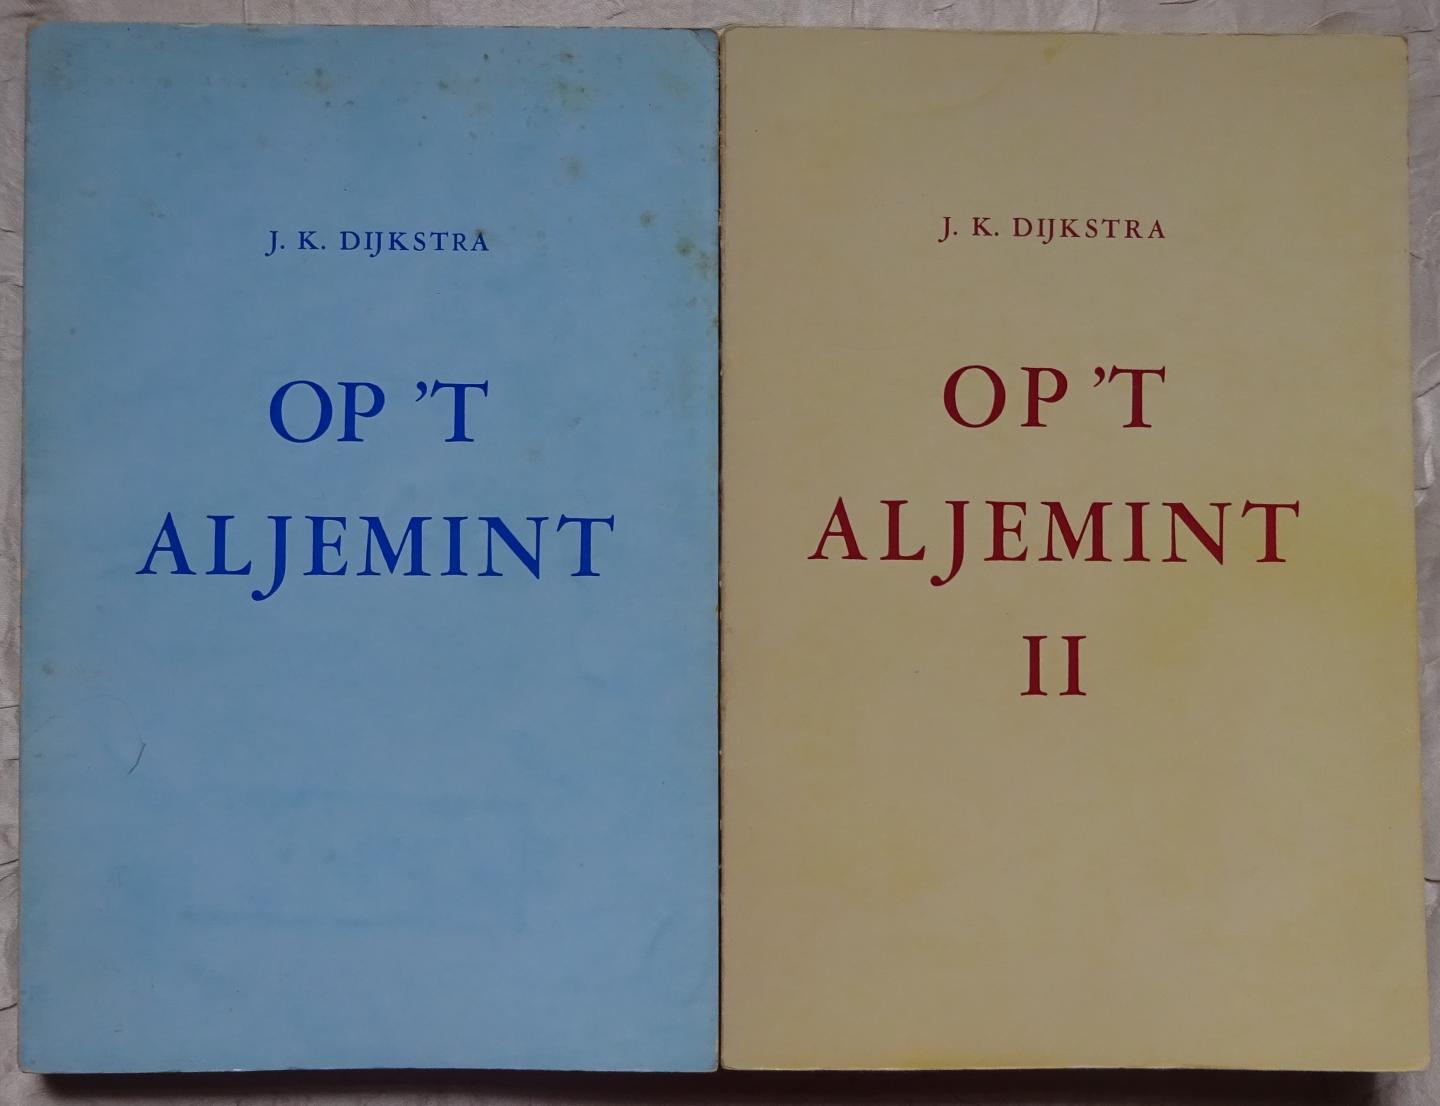 Dijkstra, J.K. - Op 't aljemint I & II